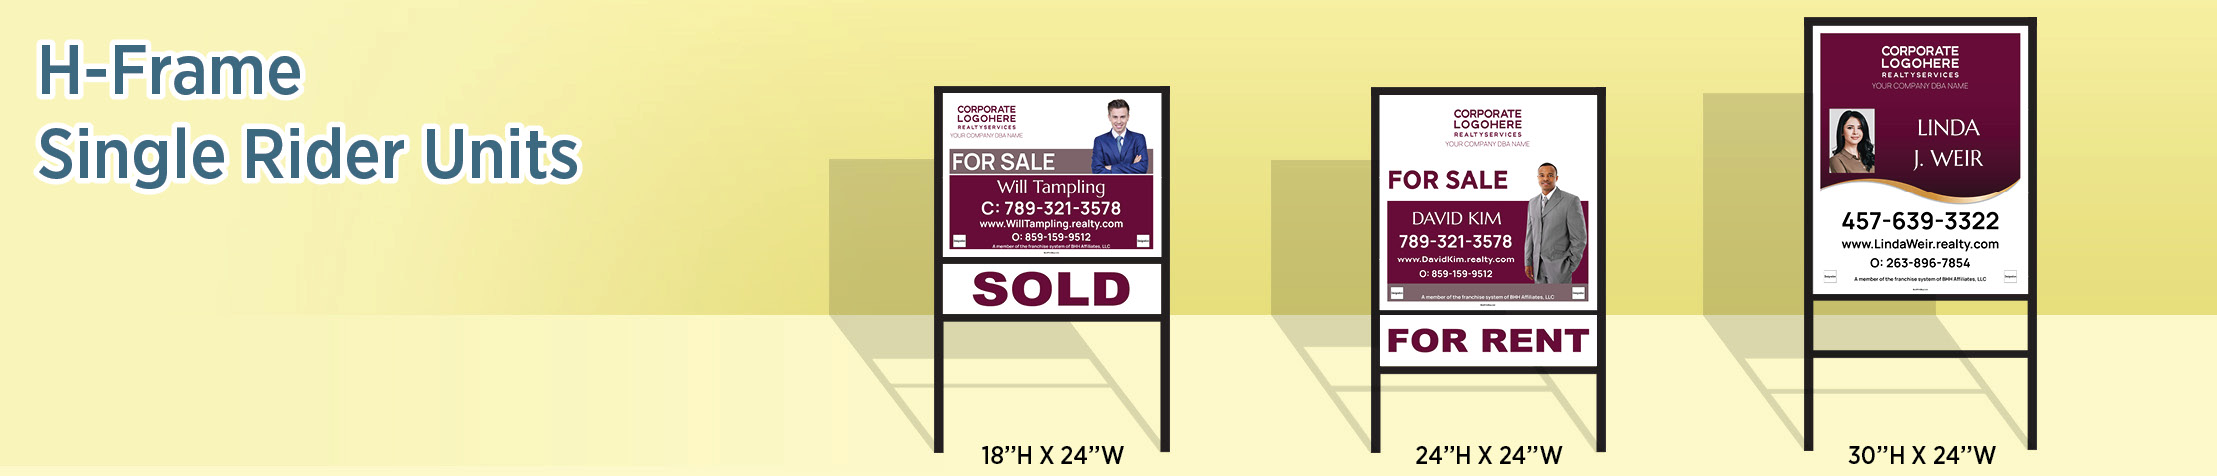 Berkshire Hathaway Real Estate H-Frame Single Rider Units - BHHS approved vendor real estate signs | BestPrintBuy.com